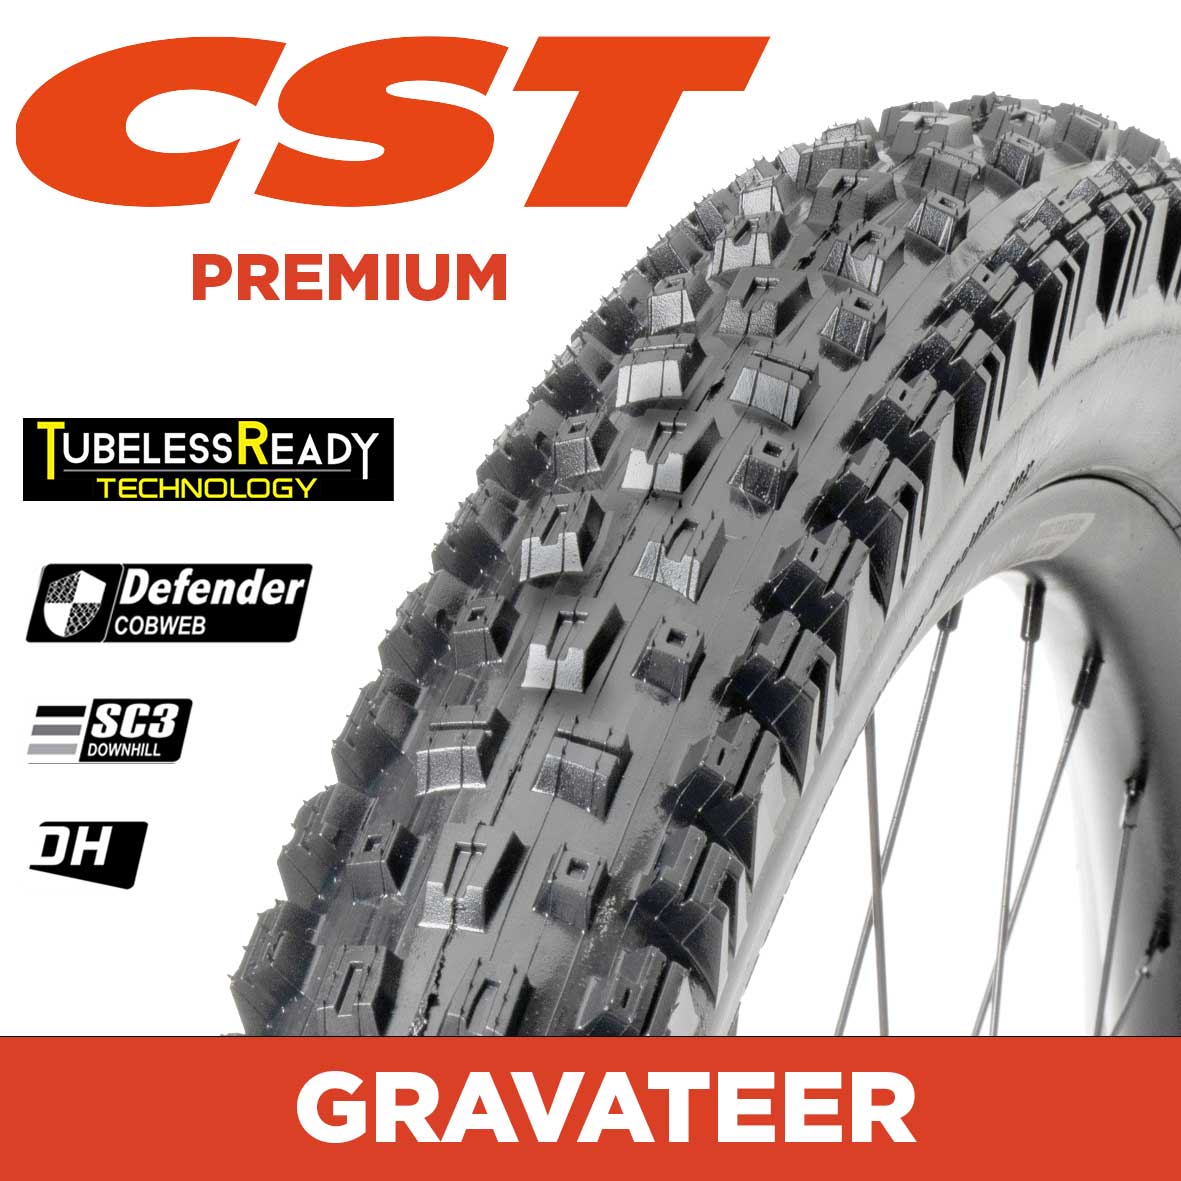 Cst Gravateer 29X2.5 Dh 3C Tr Mountain Bike Tyres